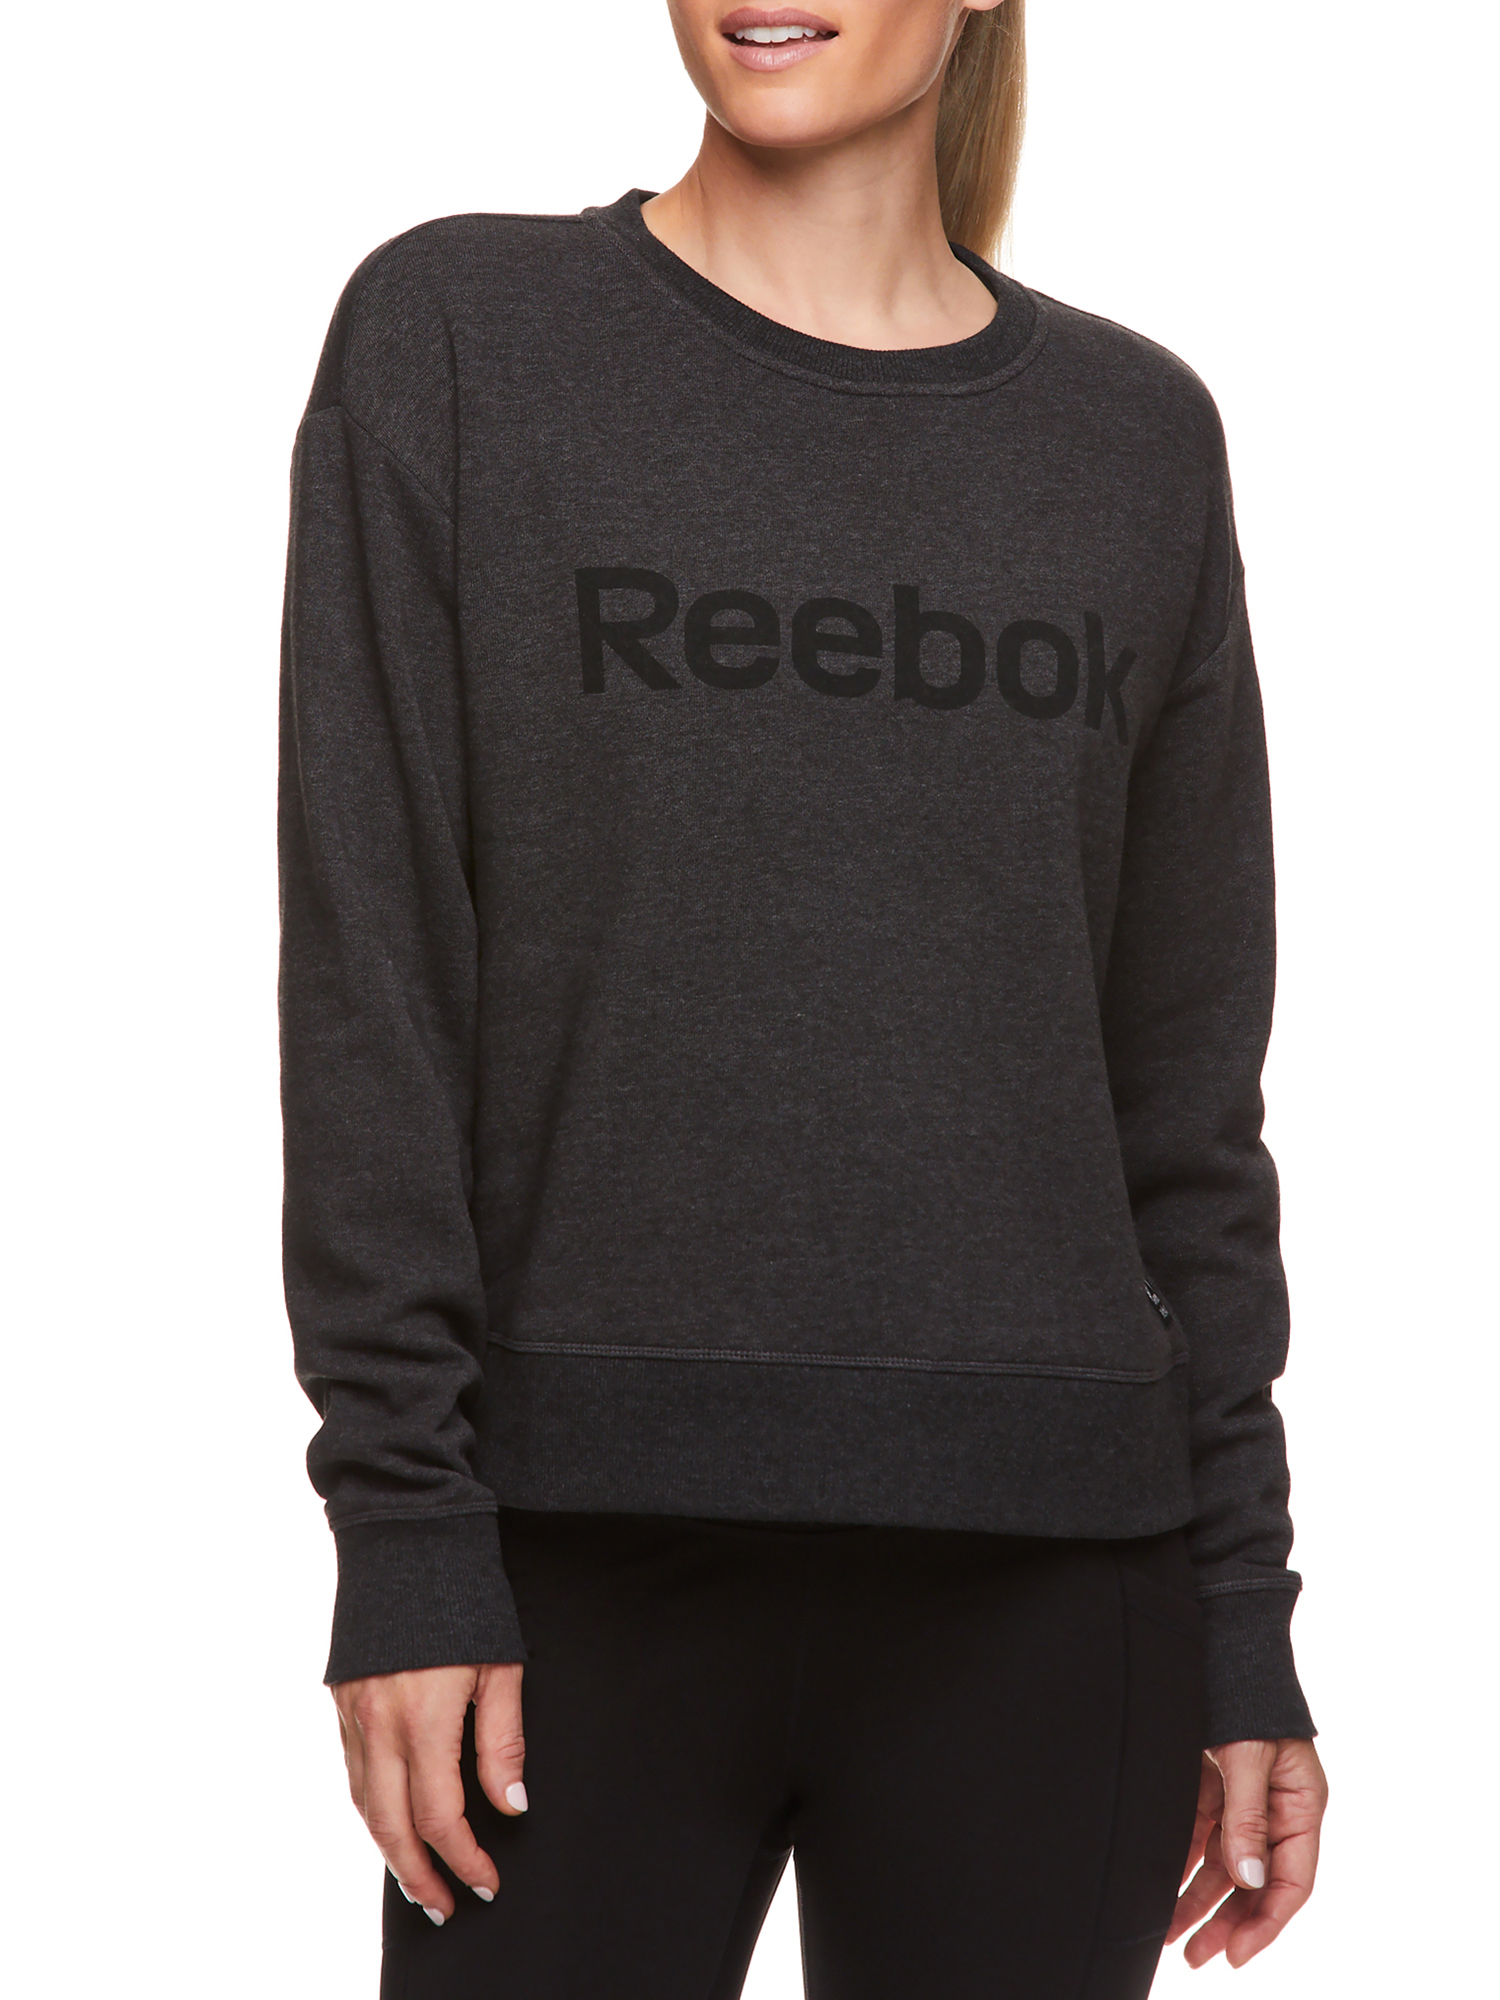 Reebok Women's Plus Size Cozy Crewneck Sweater with Graphic - image 1 of 4